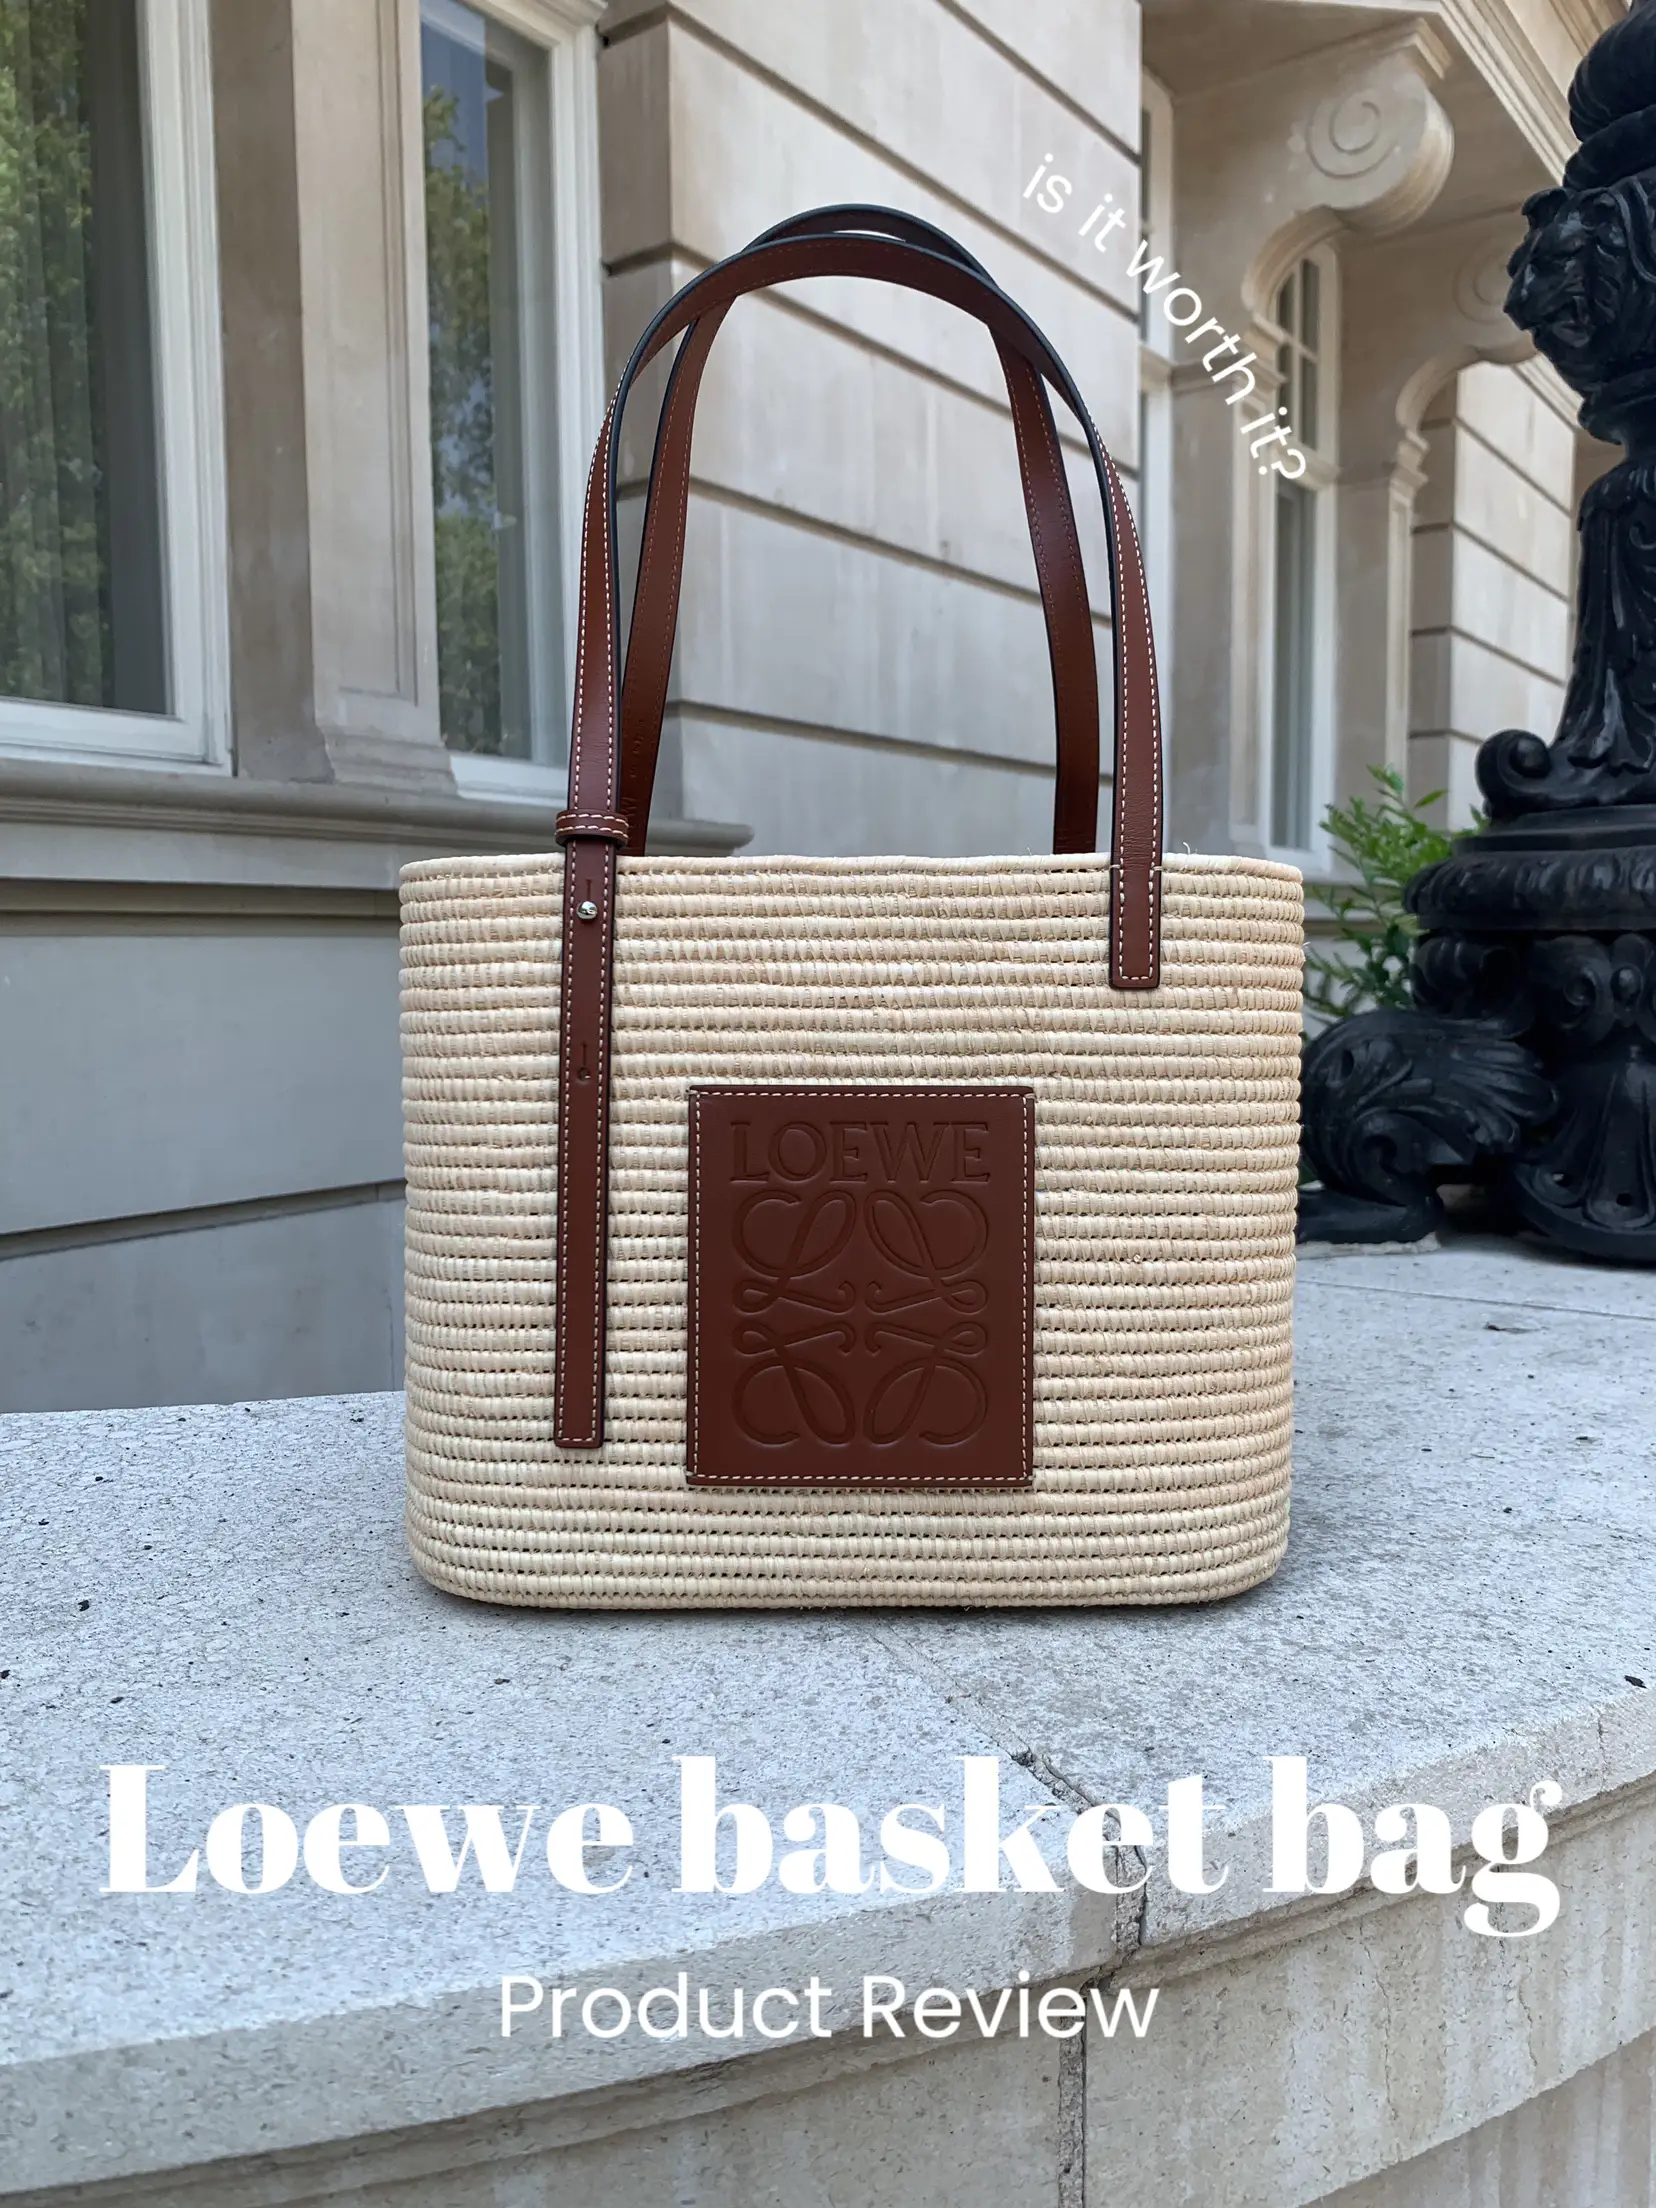 Loewe Basket Bag  The Timeless Designer Accessory Everyone Is